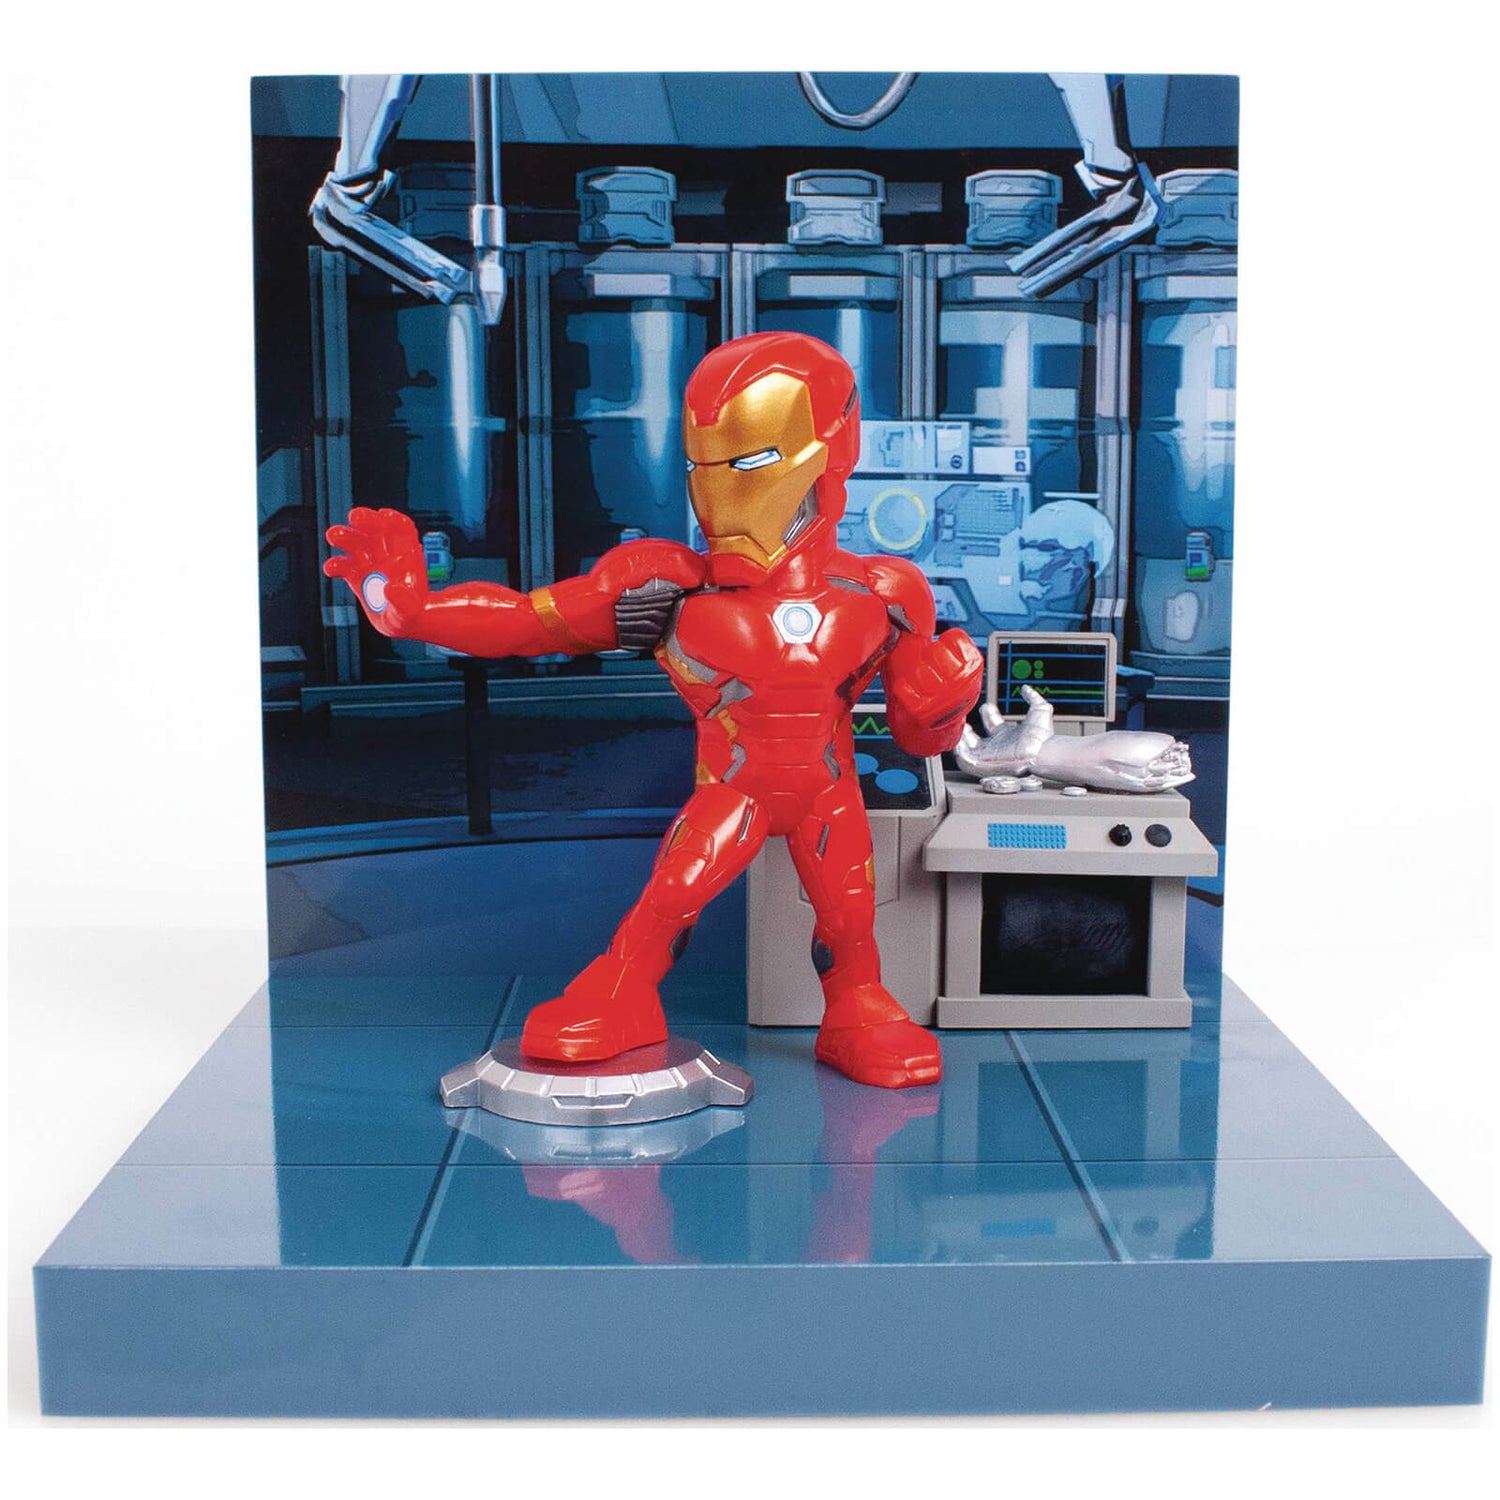 The Loyal Subjects Superama Marvel Comics Figural Diorama - Iron Man